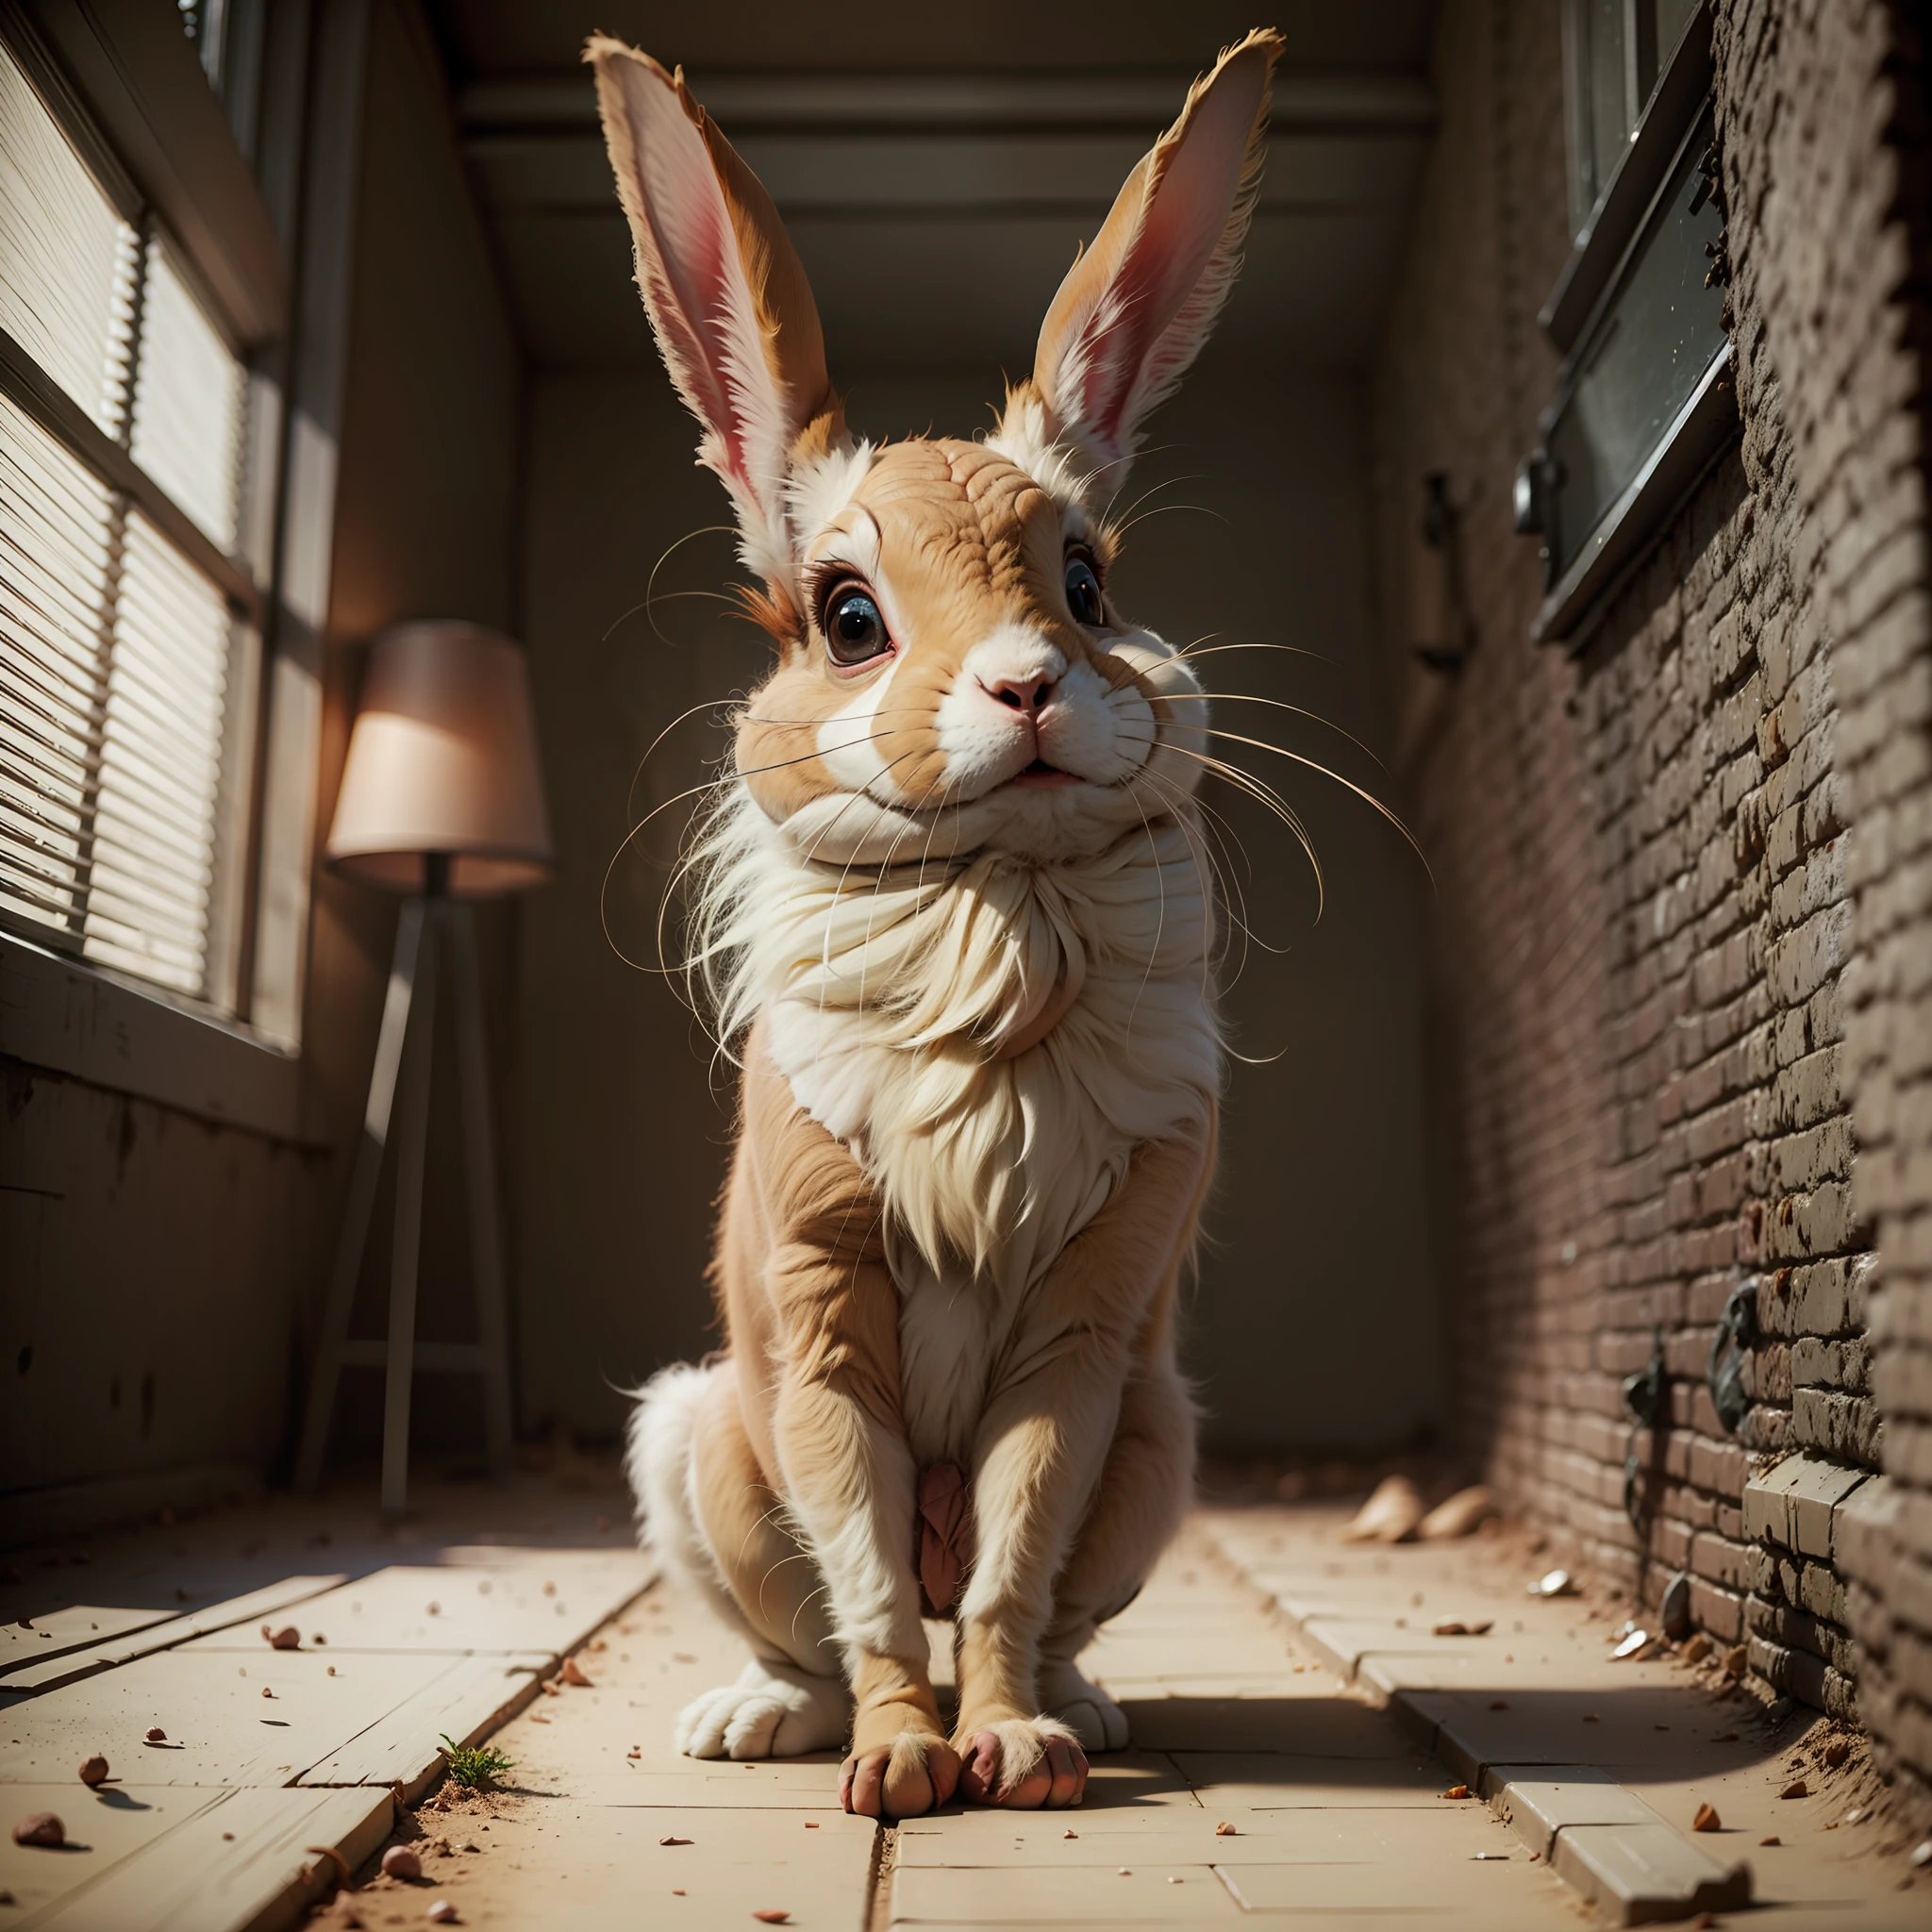 horror movie rabbit